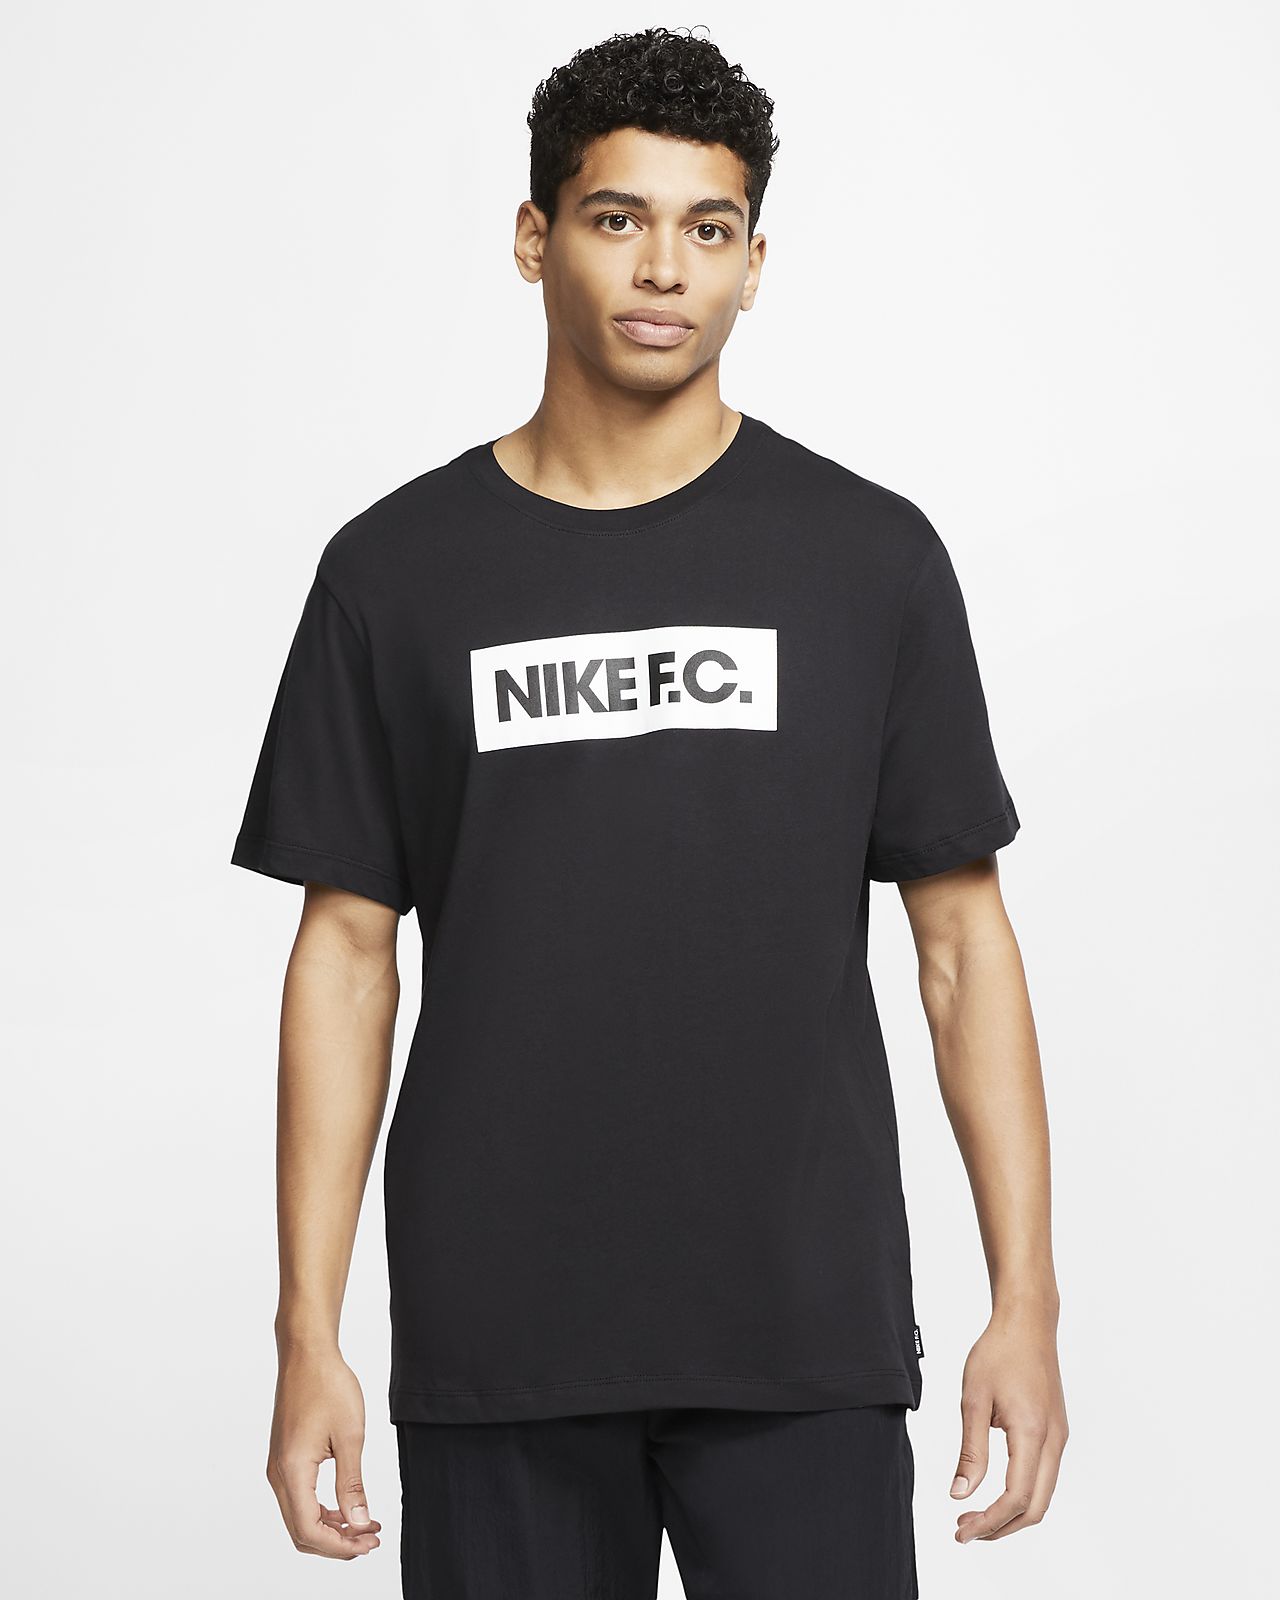 Nike F.C. Men's Football T-Shirt. Nike ZA